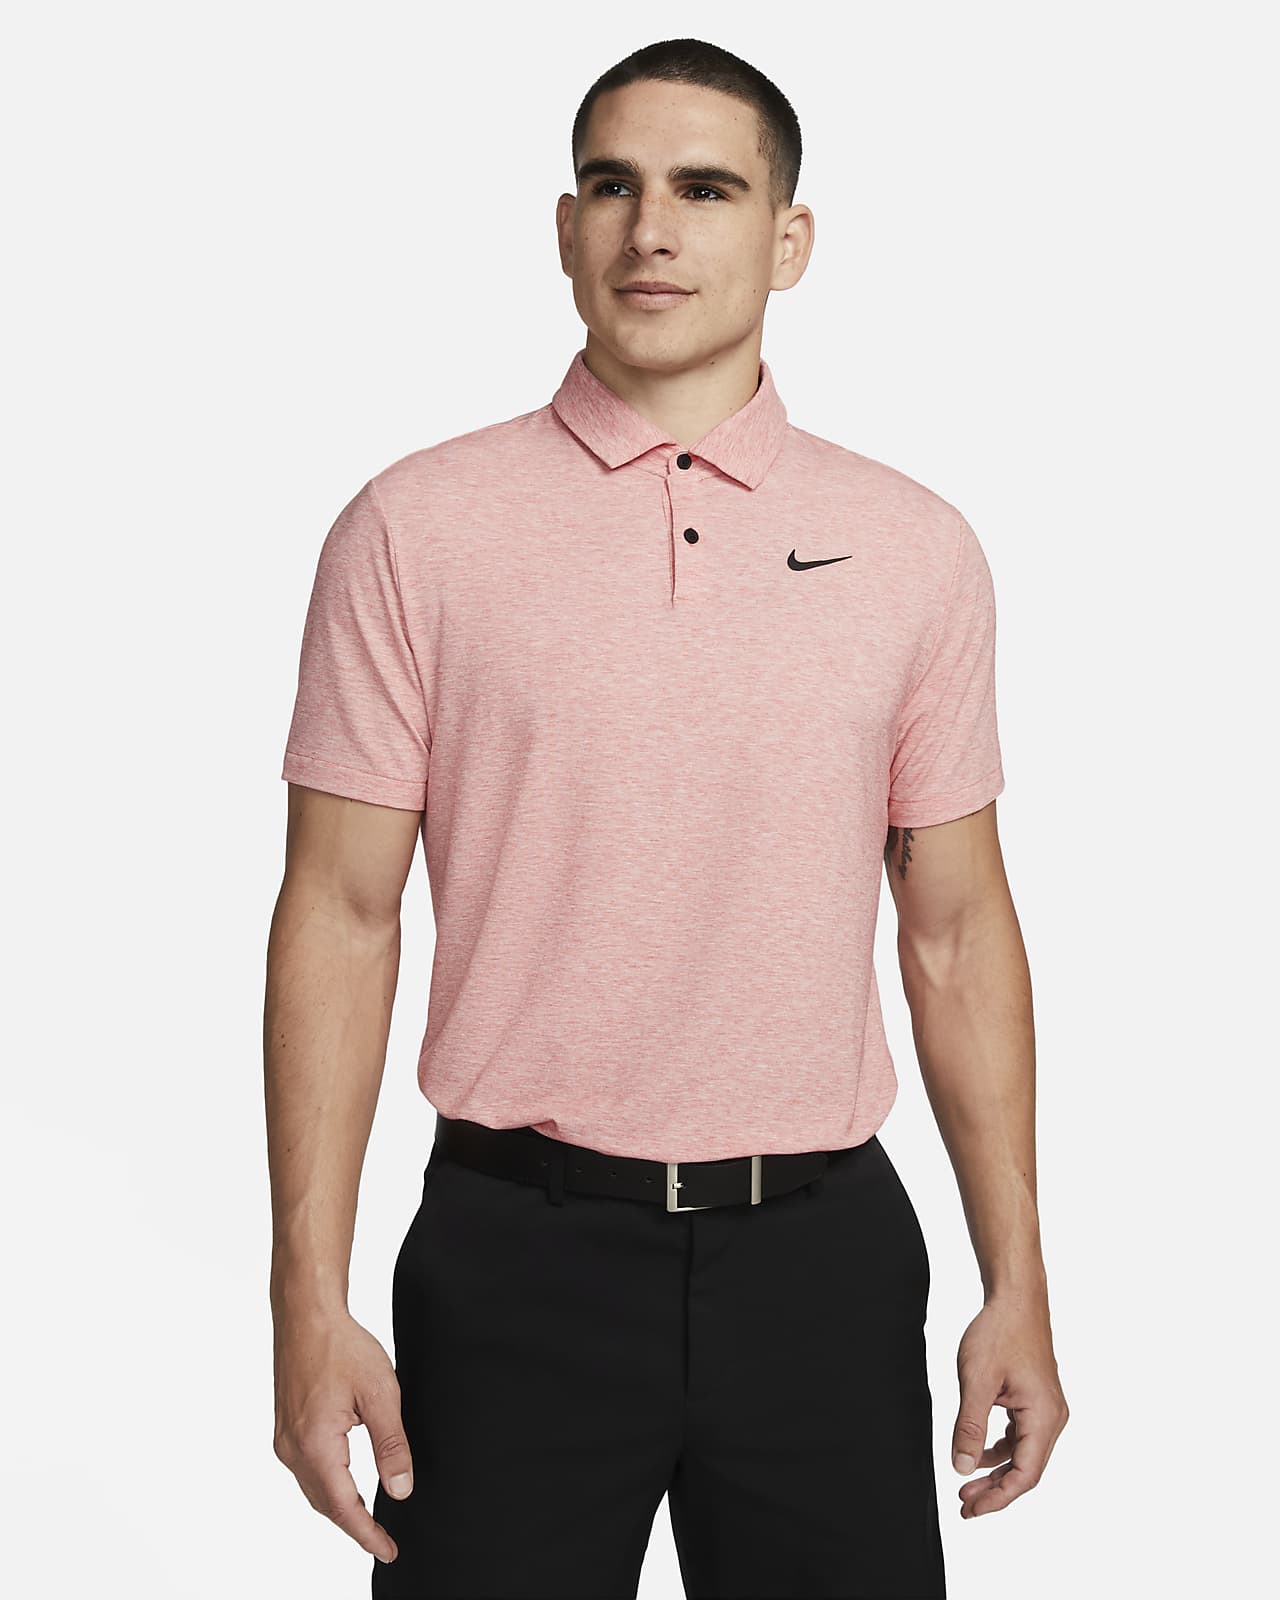 Nike Men's Golf Nike.com